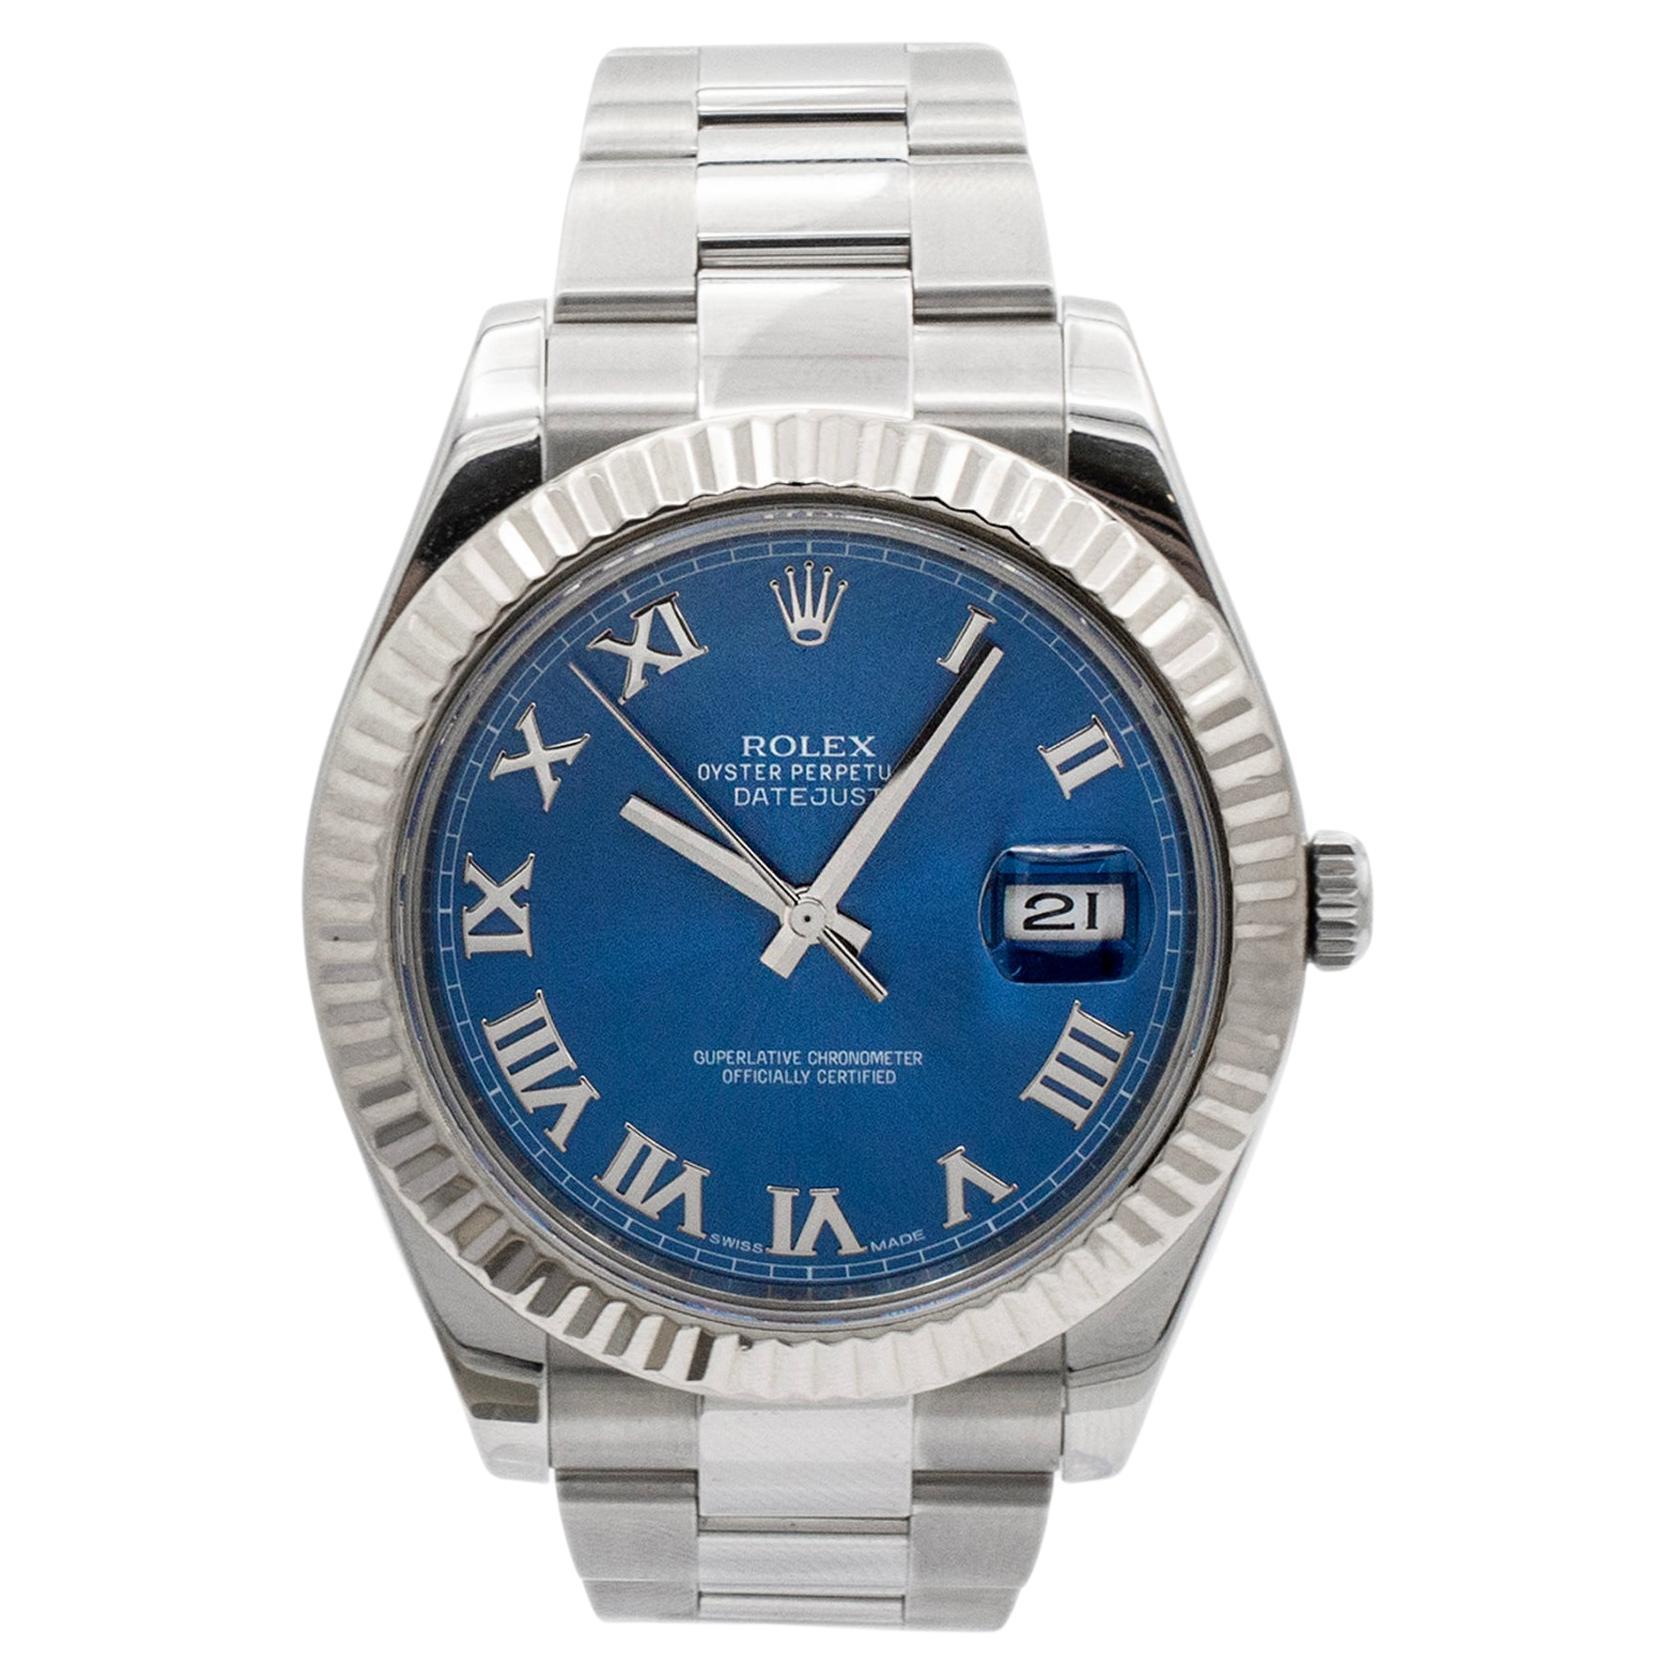 Rolex Datejust II 41MM 116300 Blue Roman Dial Oyster Stainless Steel Men’s Watch